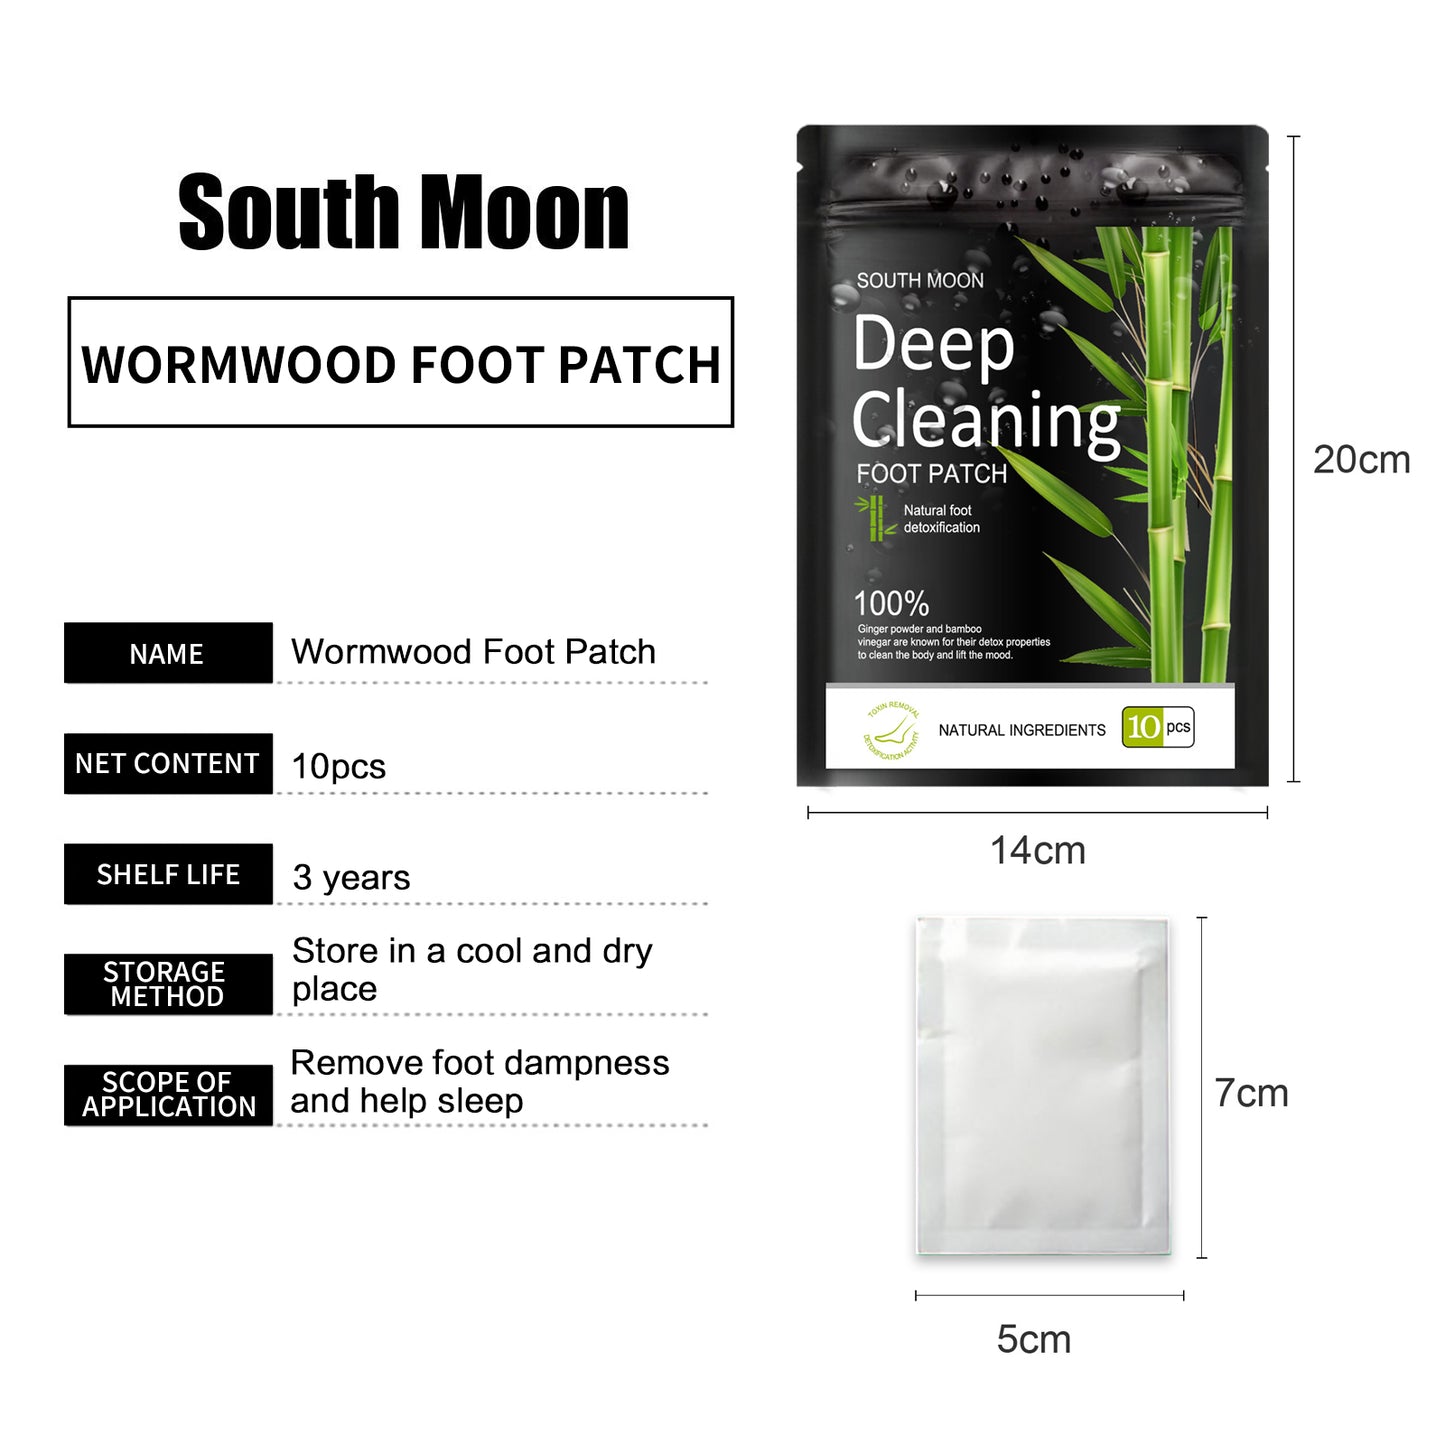 South Moon Wormwood Foot Patch Detoxification Wet Feet Massage Promote Sleep Detox Foot Patch Feet Health Care(10pcs)